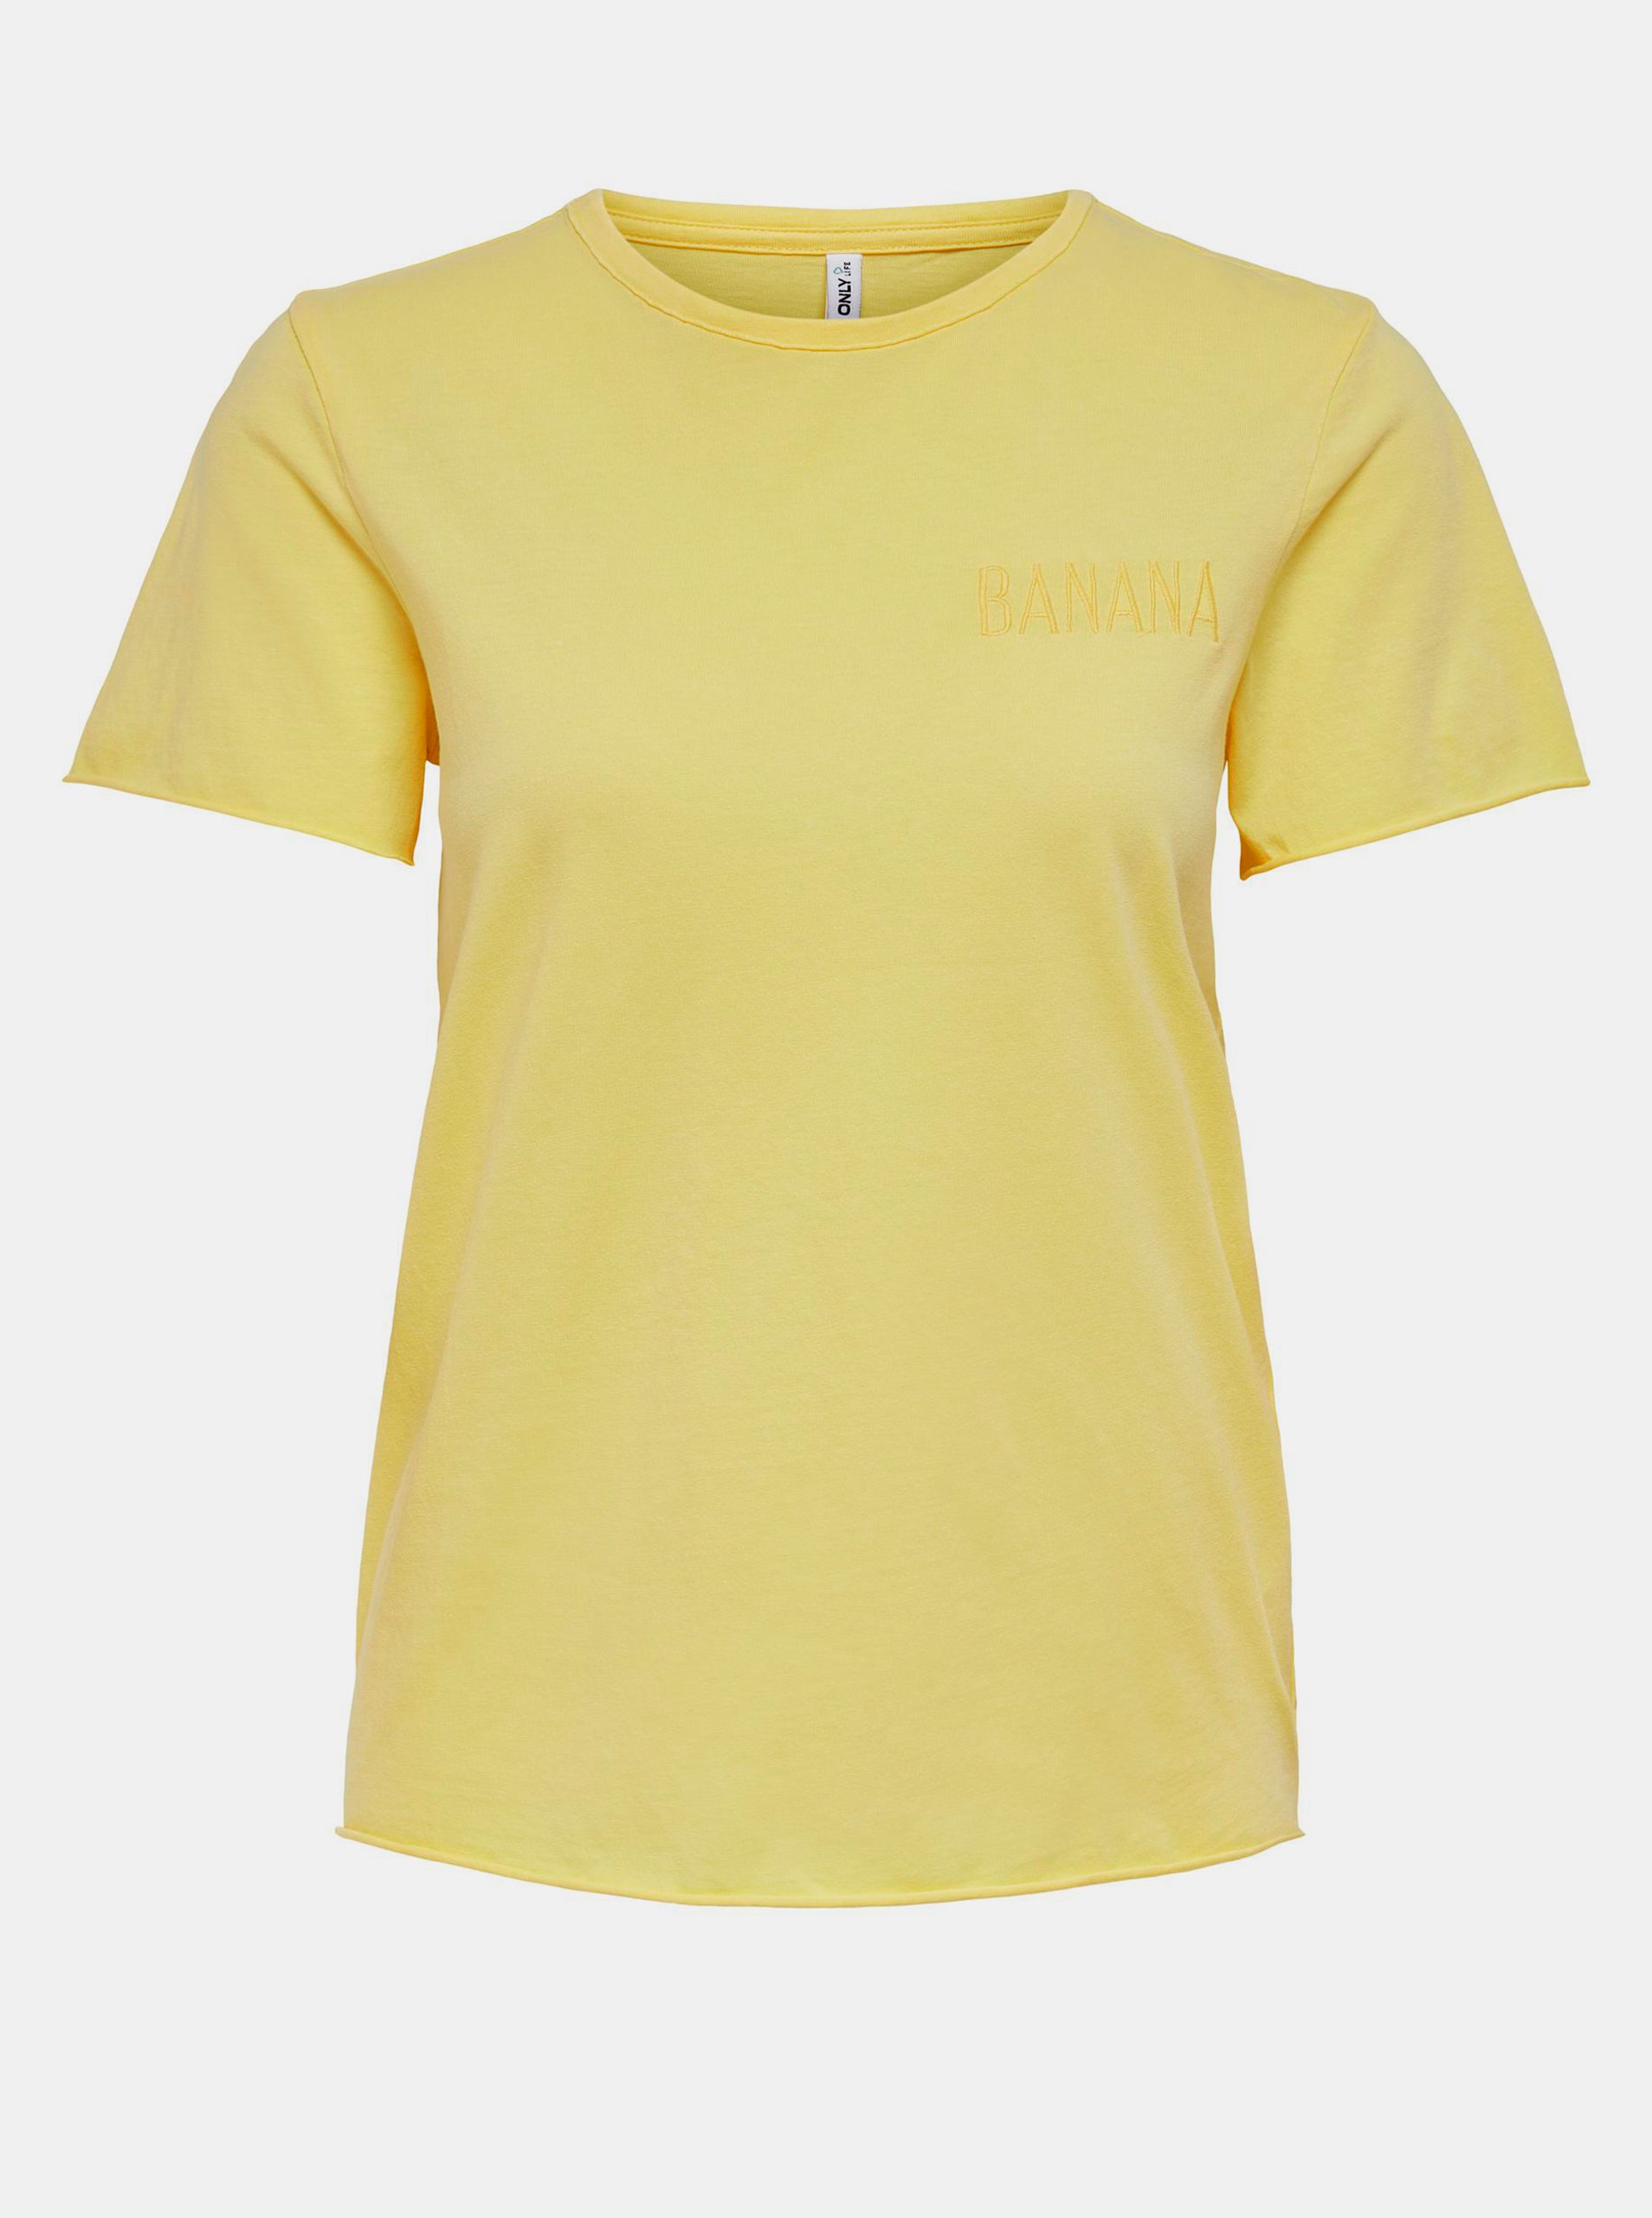 Yellow basic T-shirt ONLY Fruity - Women Na razprodaji-Only 1